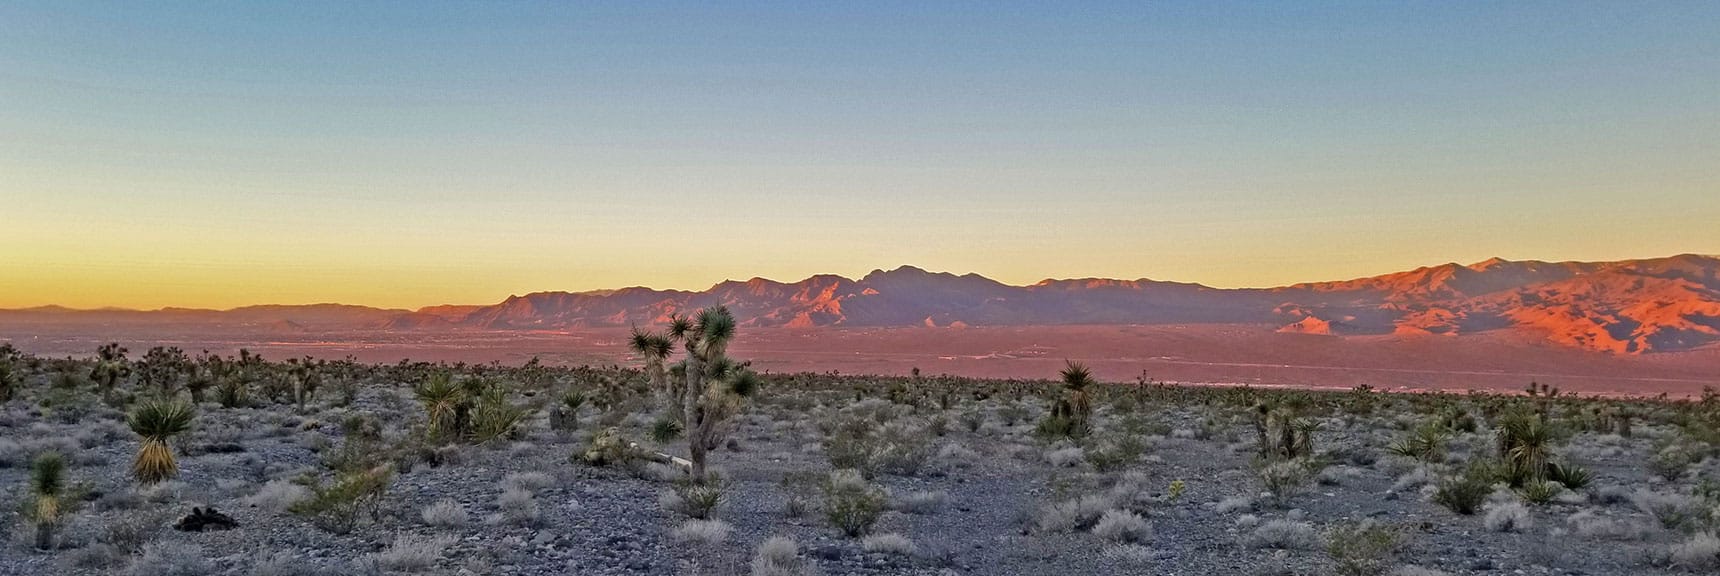 Sunrise Over the La Madre Mountains Wilderness | Gass Peak Grand Crossing | Desert National Wildlife Refuge to Centennial Hills Las Vegas via Gass Peak Summit by Foot